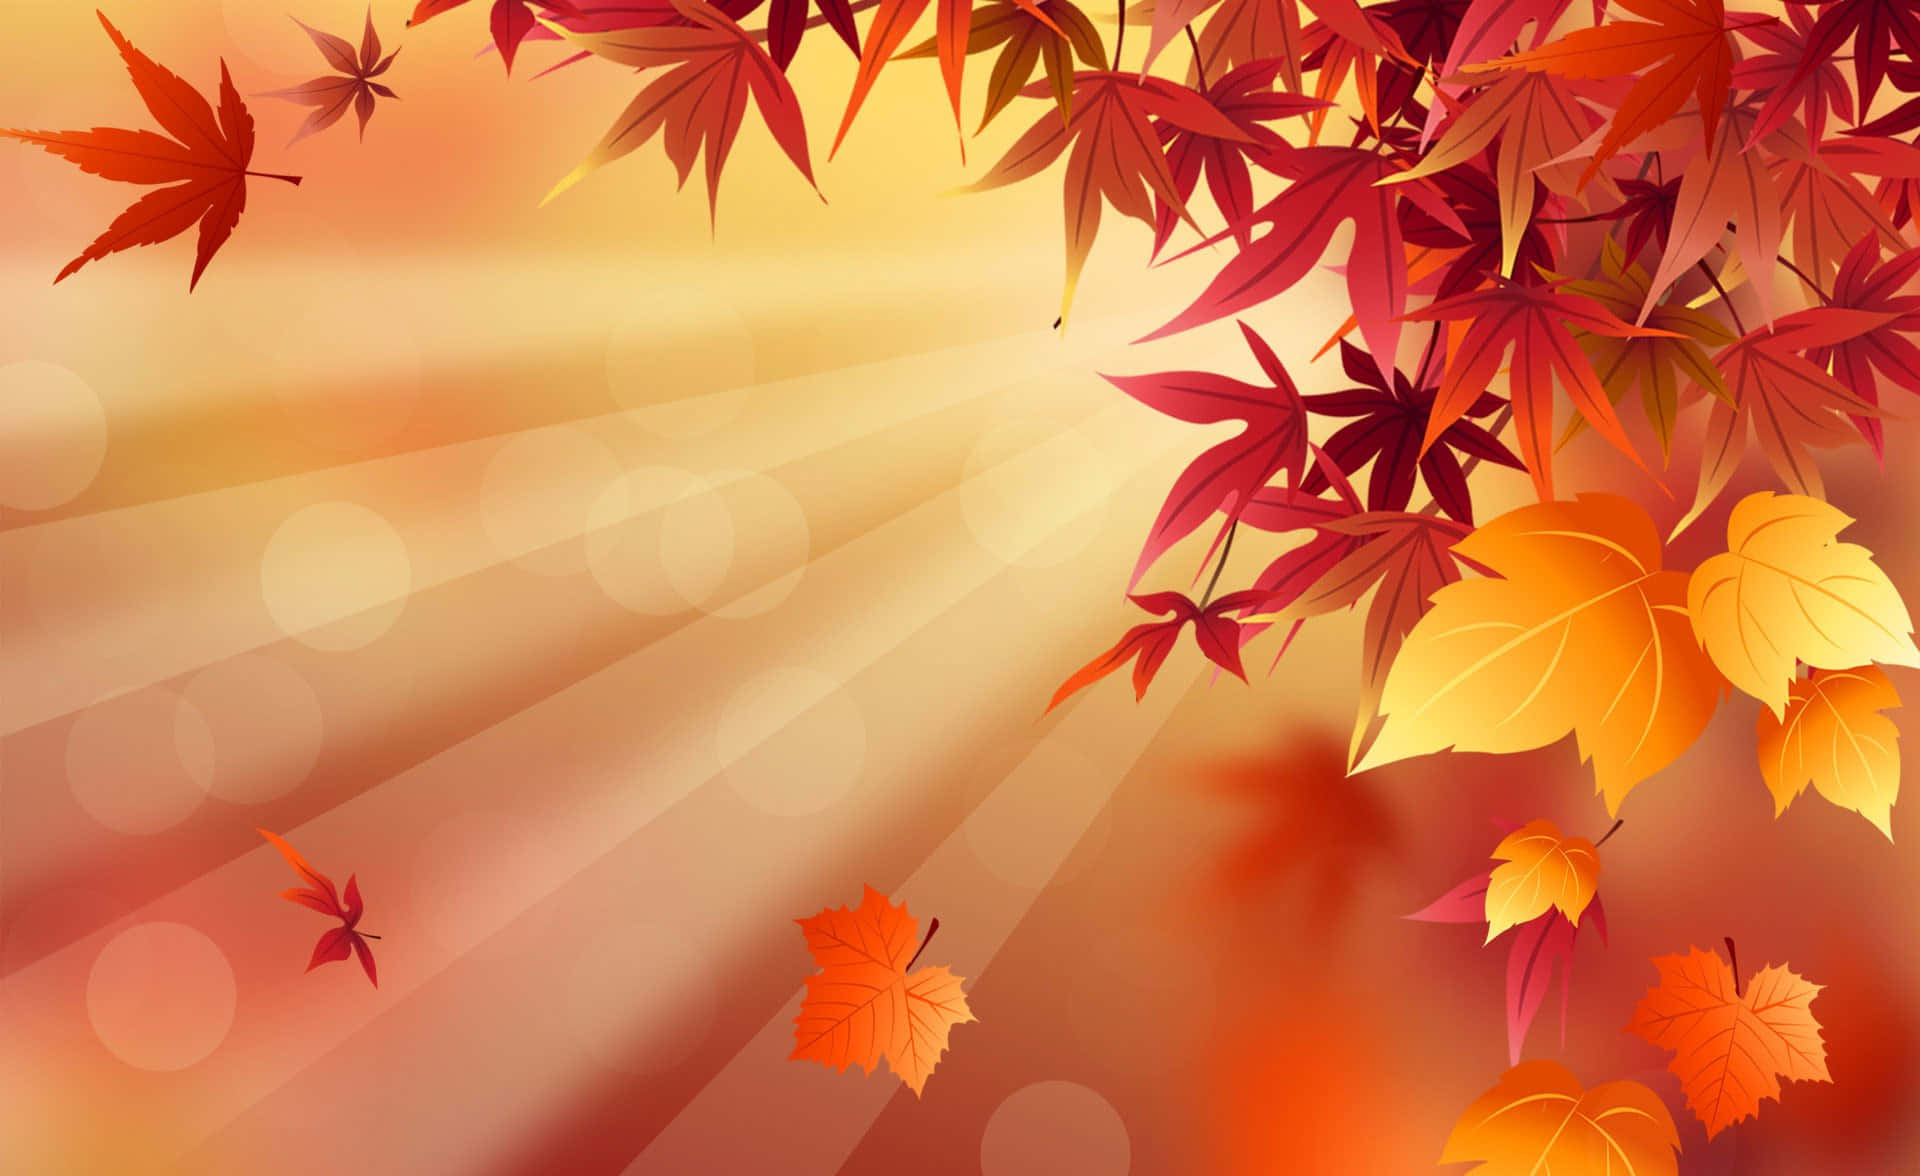 Autumn Season Falling Leaves Digital Art Wallpaper